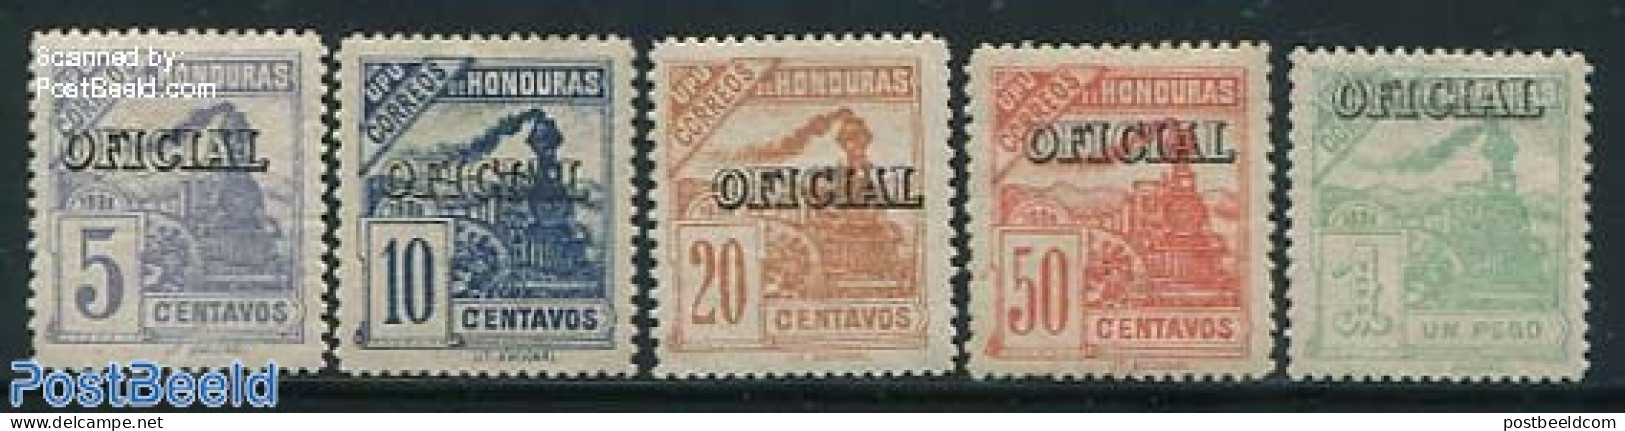 Honduras 1898 OFICIAL Overprints 5v, Mint NH, Transport - Railways - Treni